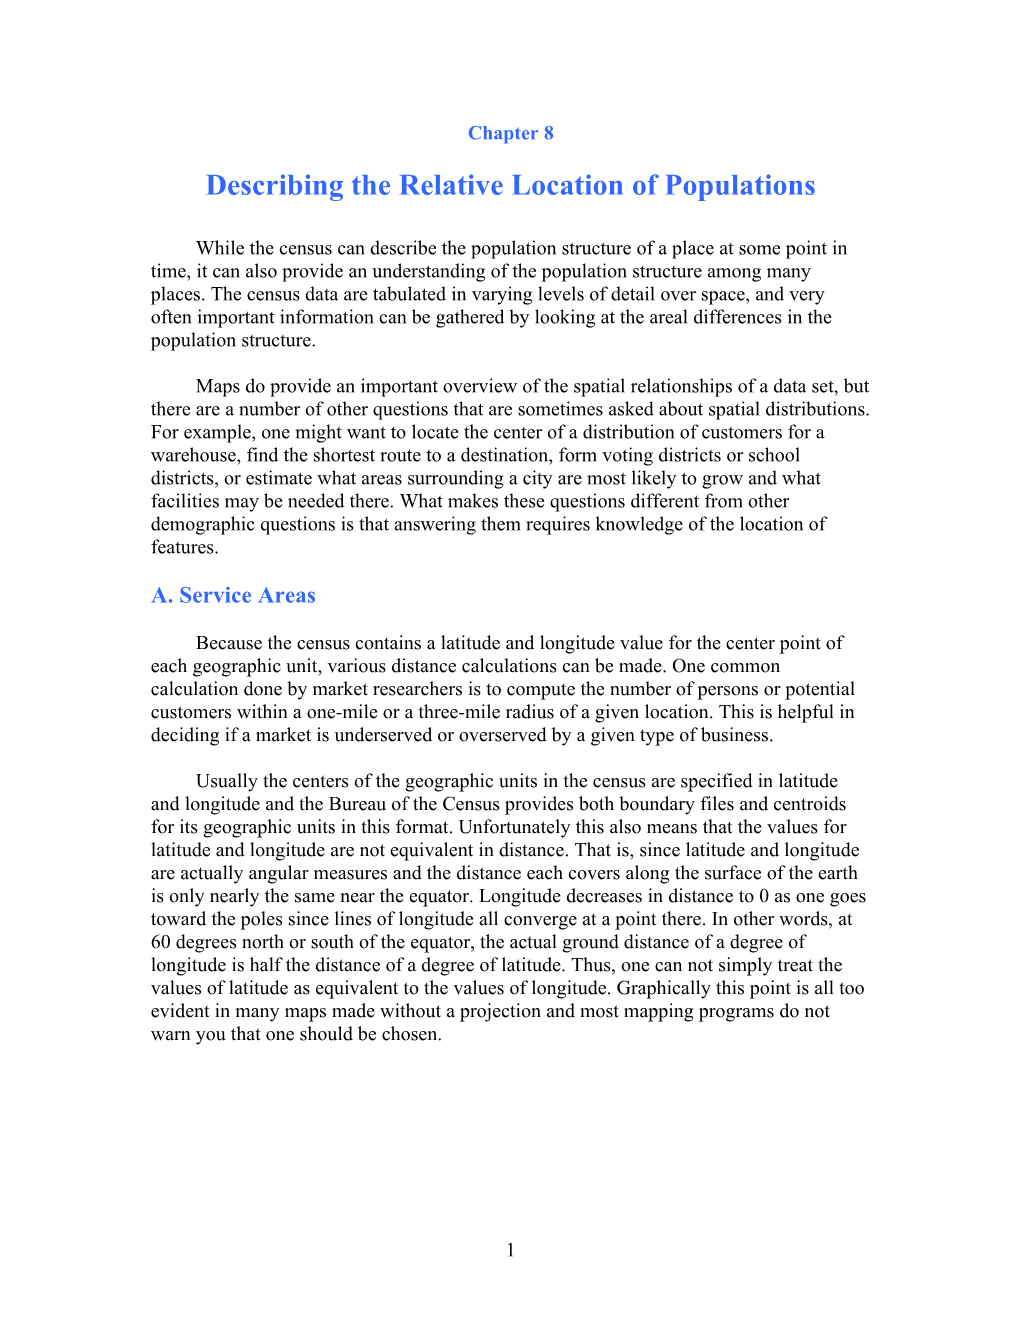 Describing the Relative Location of Populations